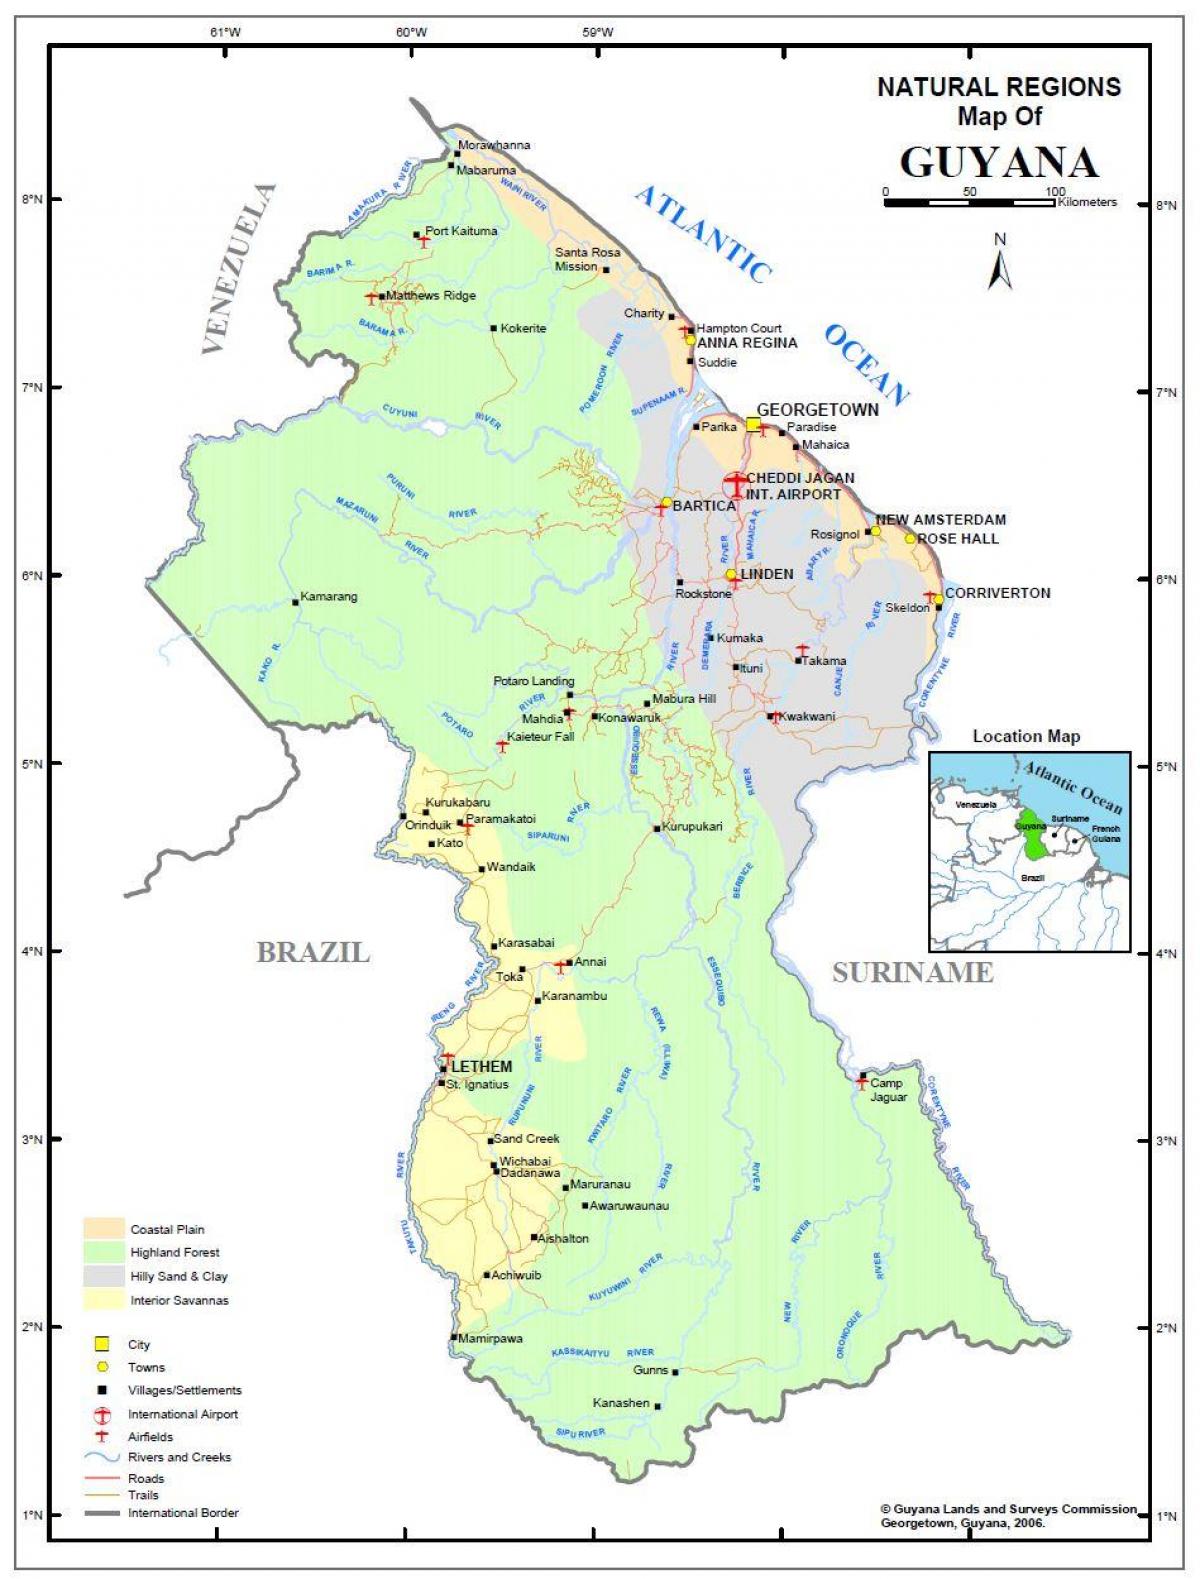 kort Guyana med naturlige ressourcer